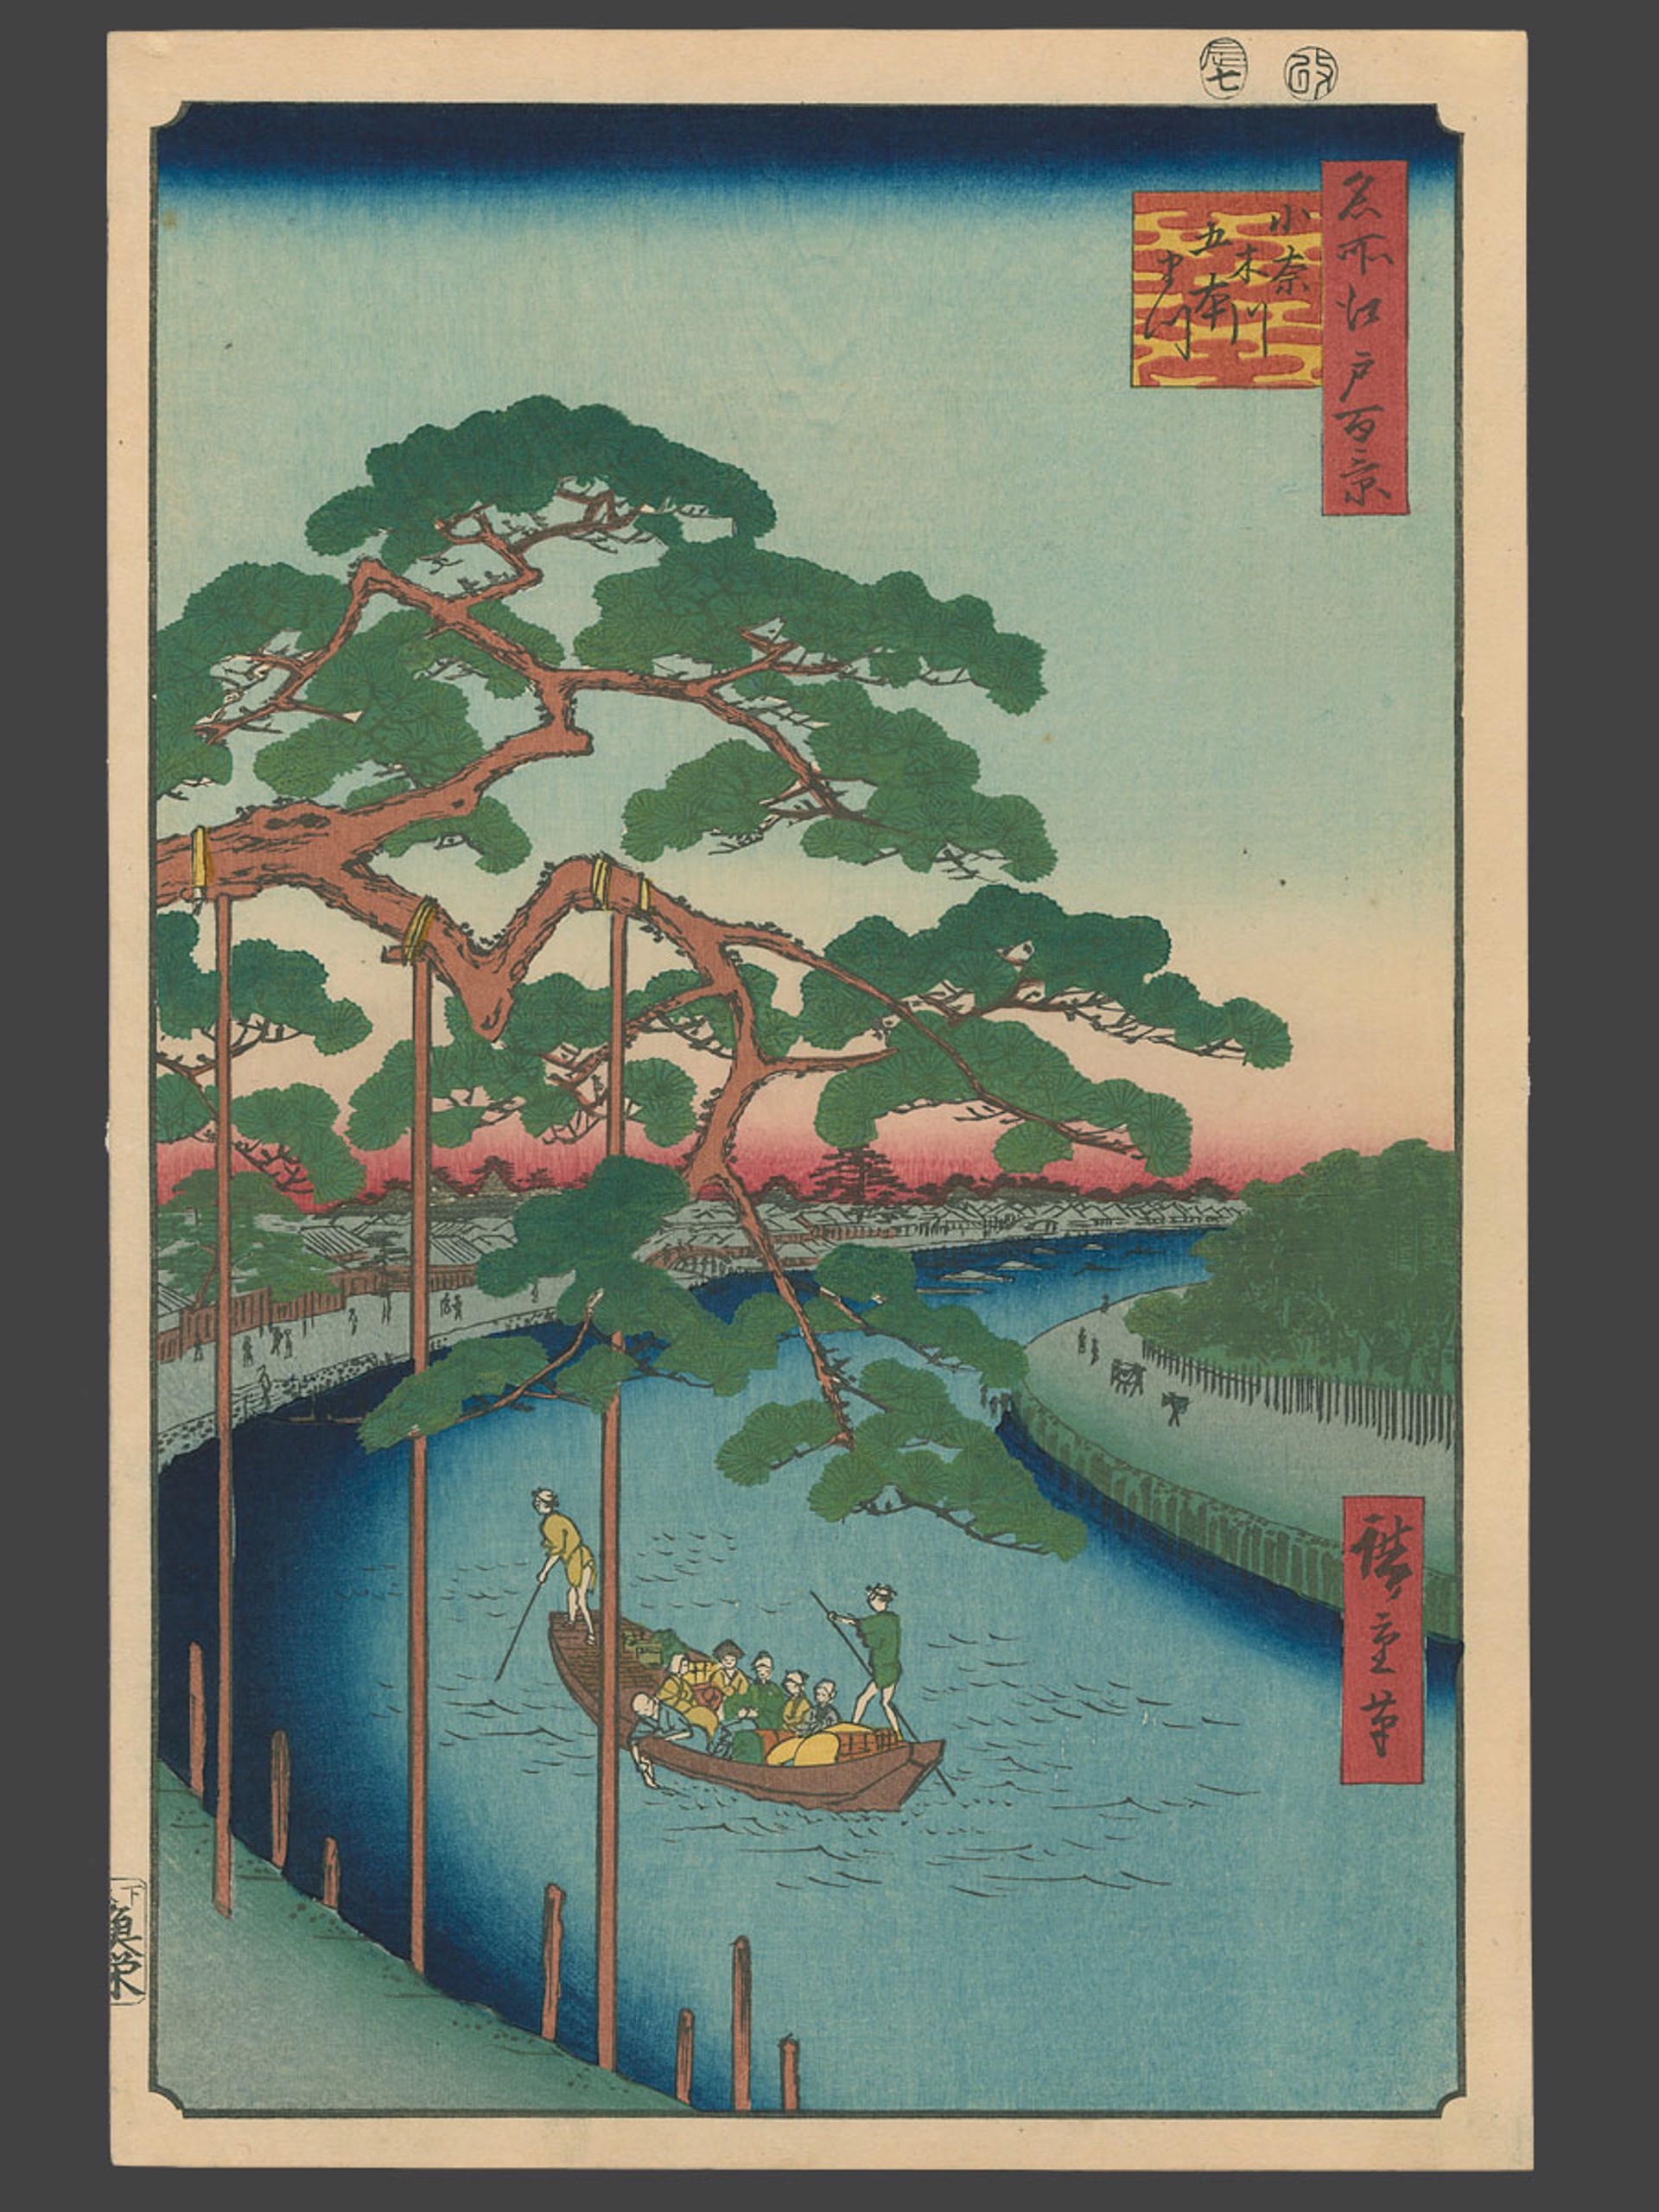 #97 Five Pines, Onagi Canal 100 Views of Edo by Hiroshige